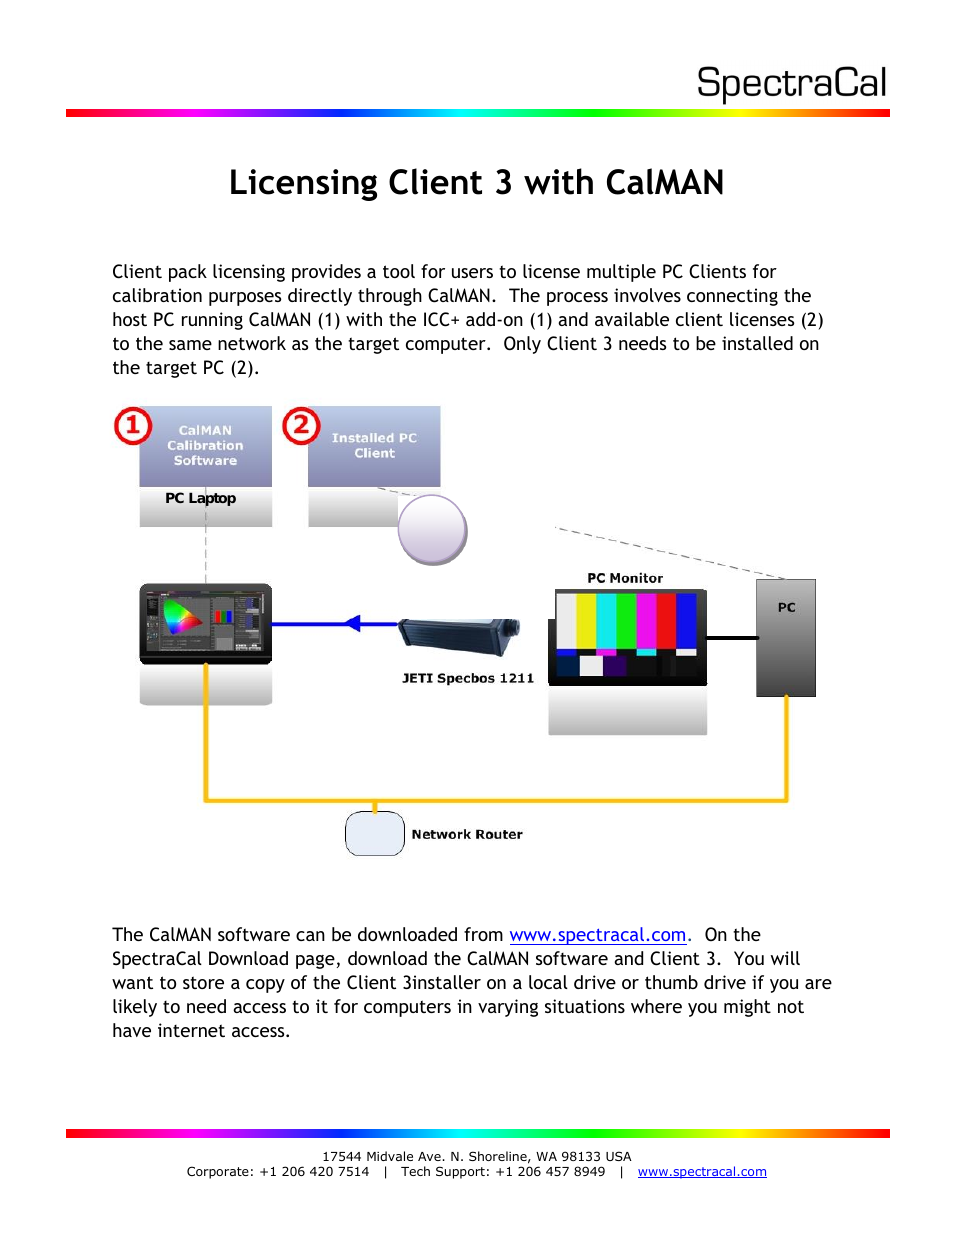 CalMAN Client 3 Licensing